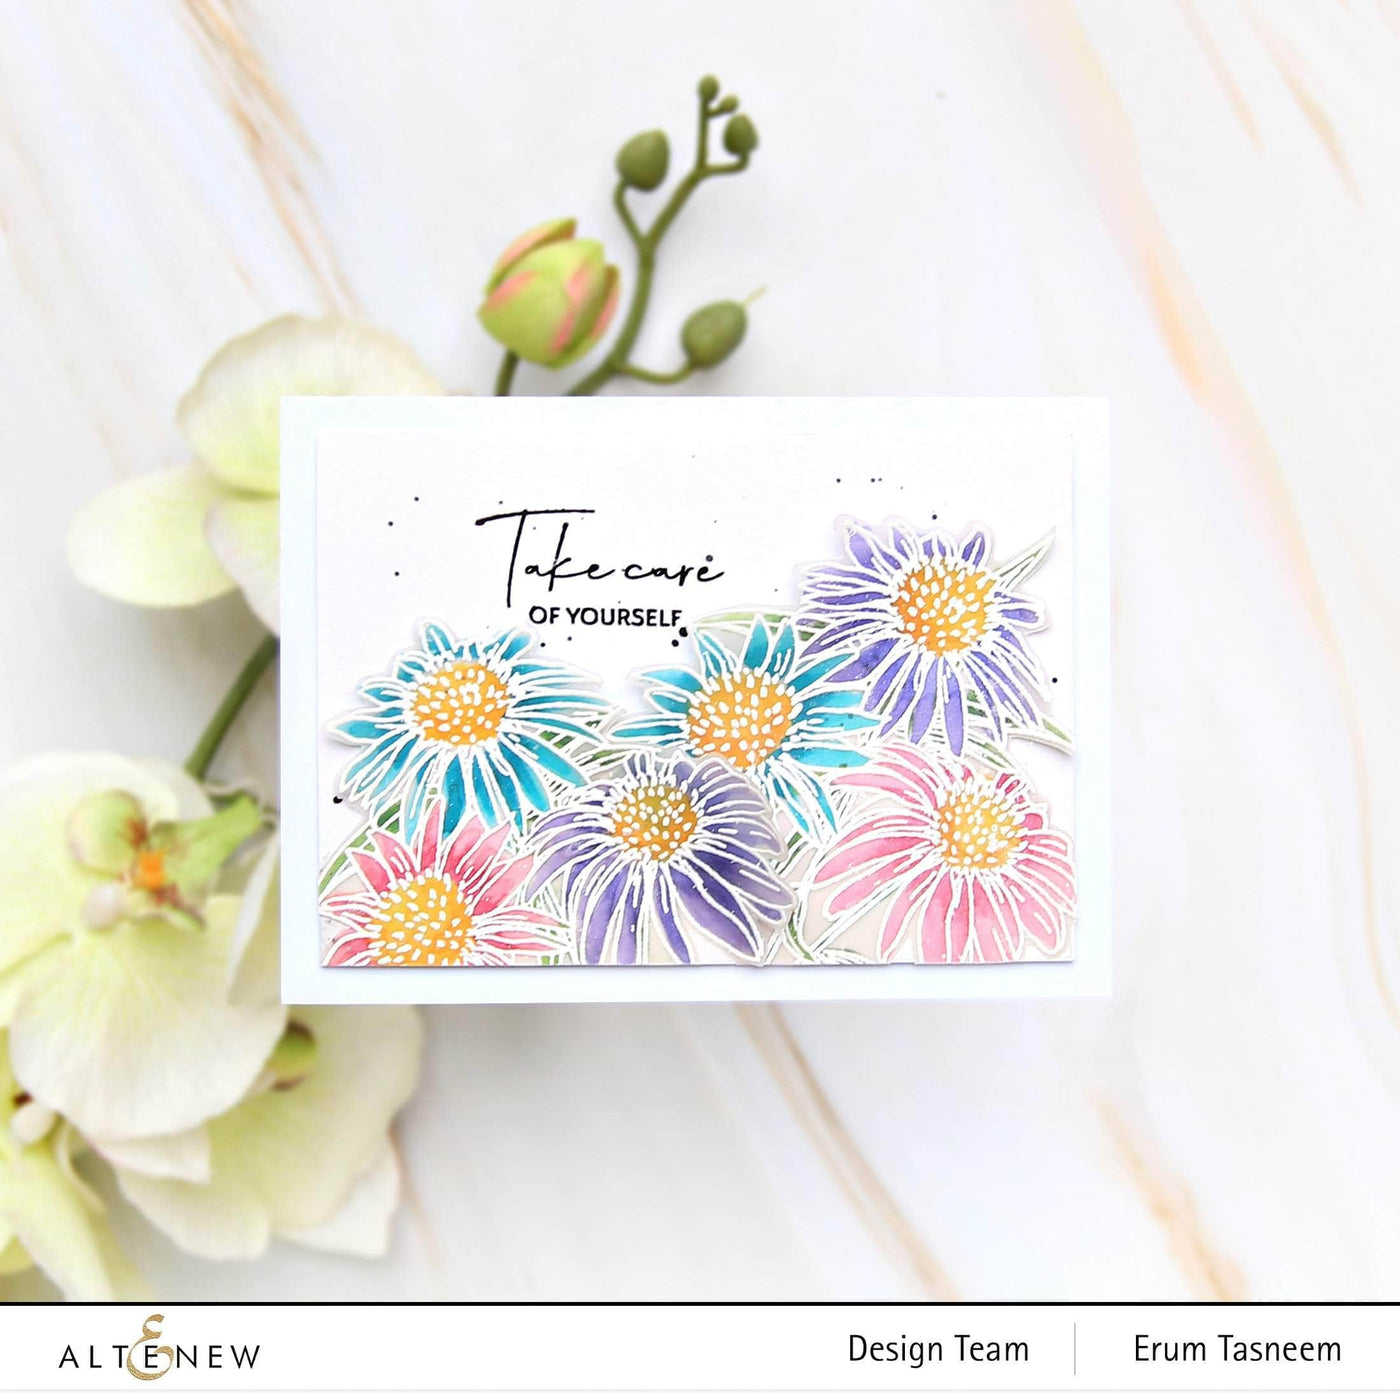 Altenew Stamp & Art Supplies Bundle Paint-A-Flower: White Swan Echinacea & Monochrome Shading Pencils Bundle